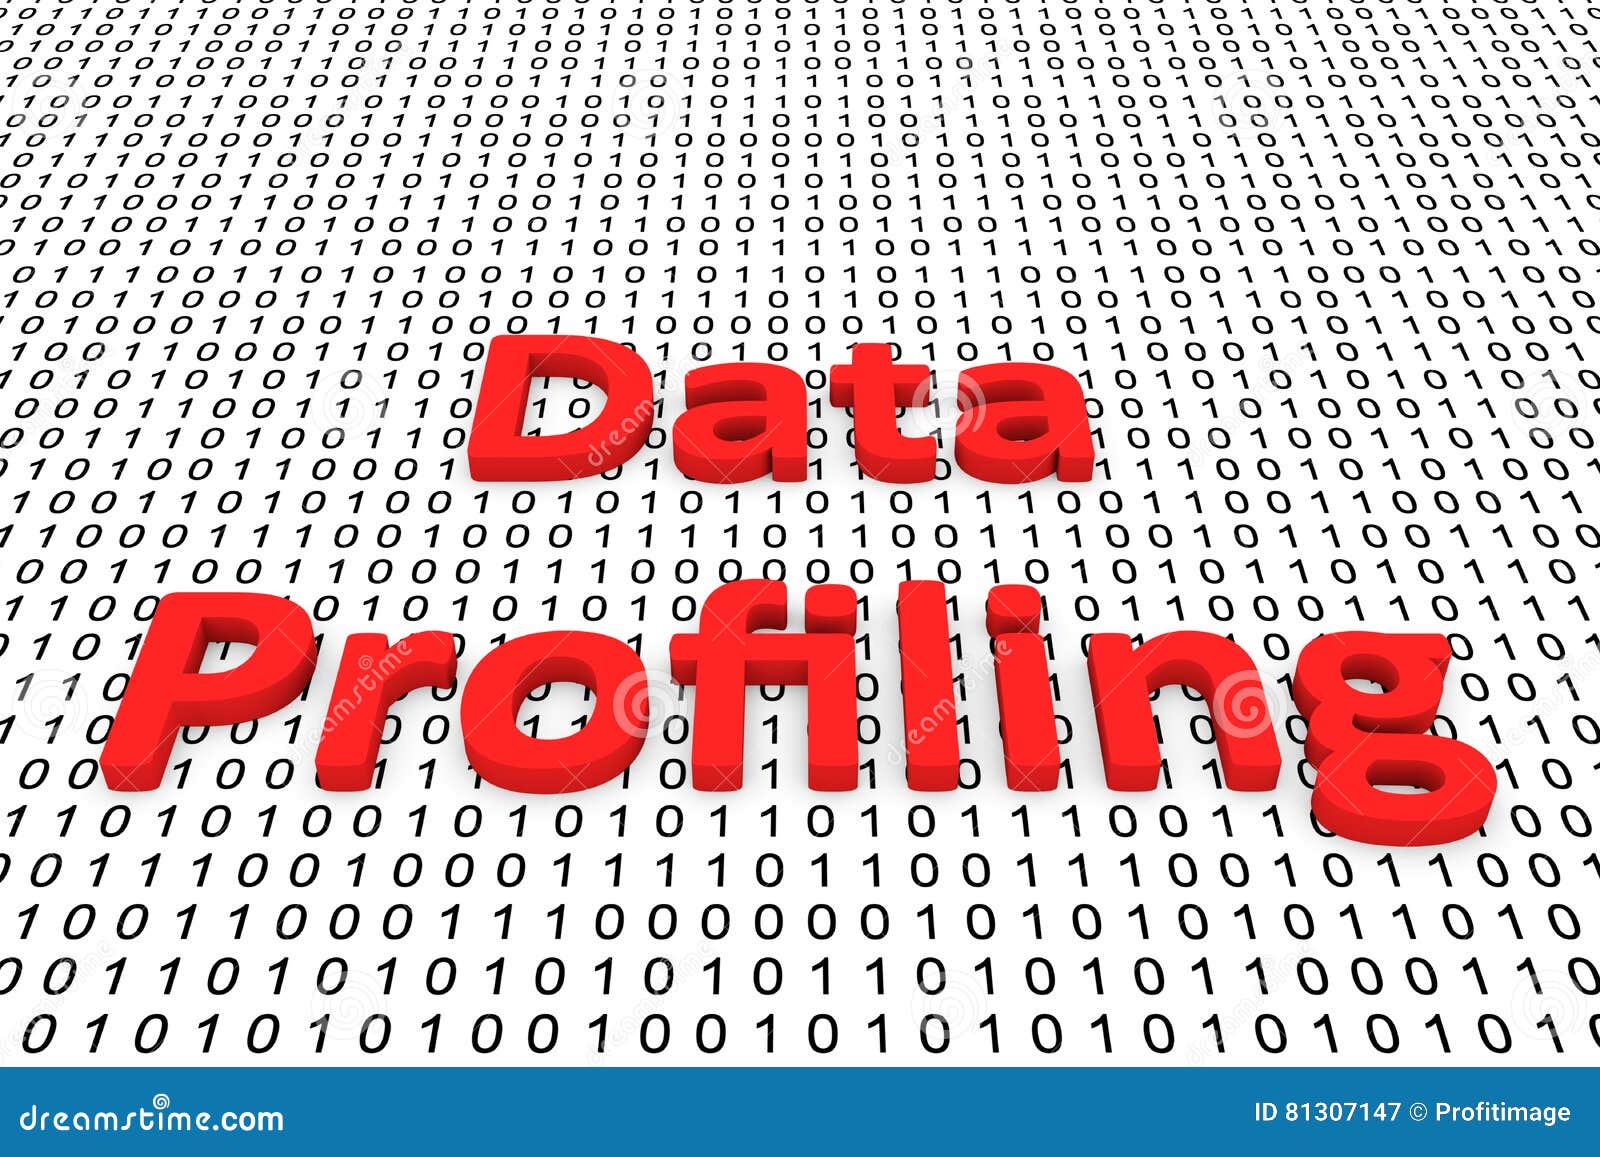 data profiling